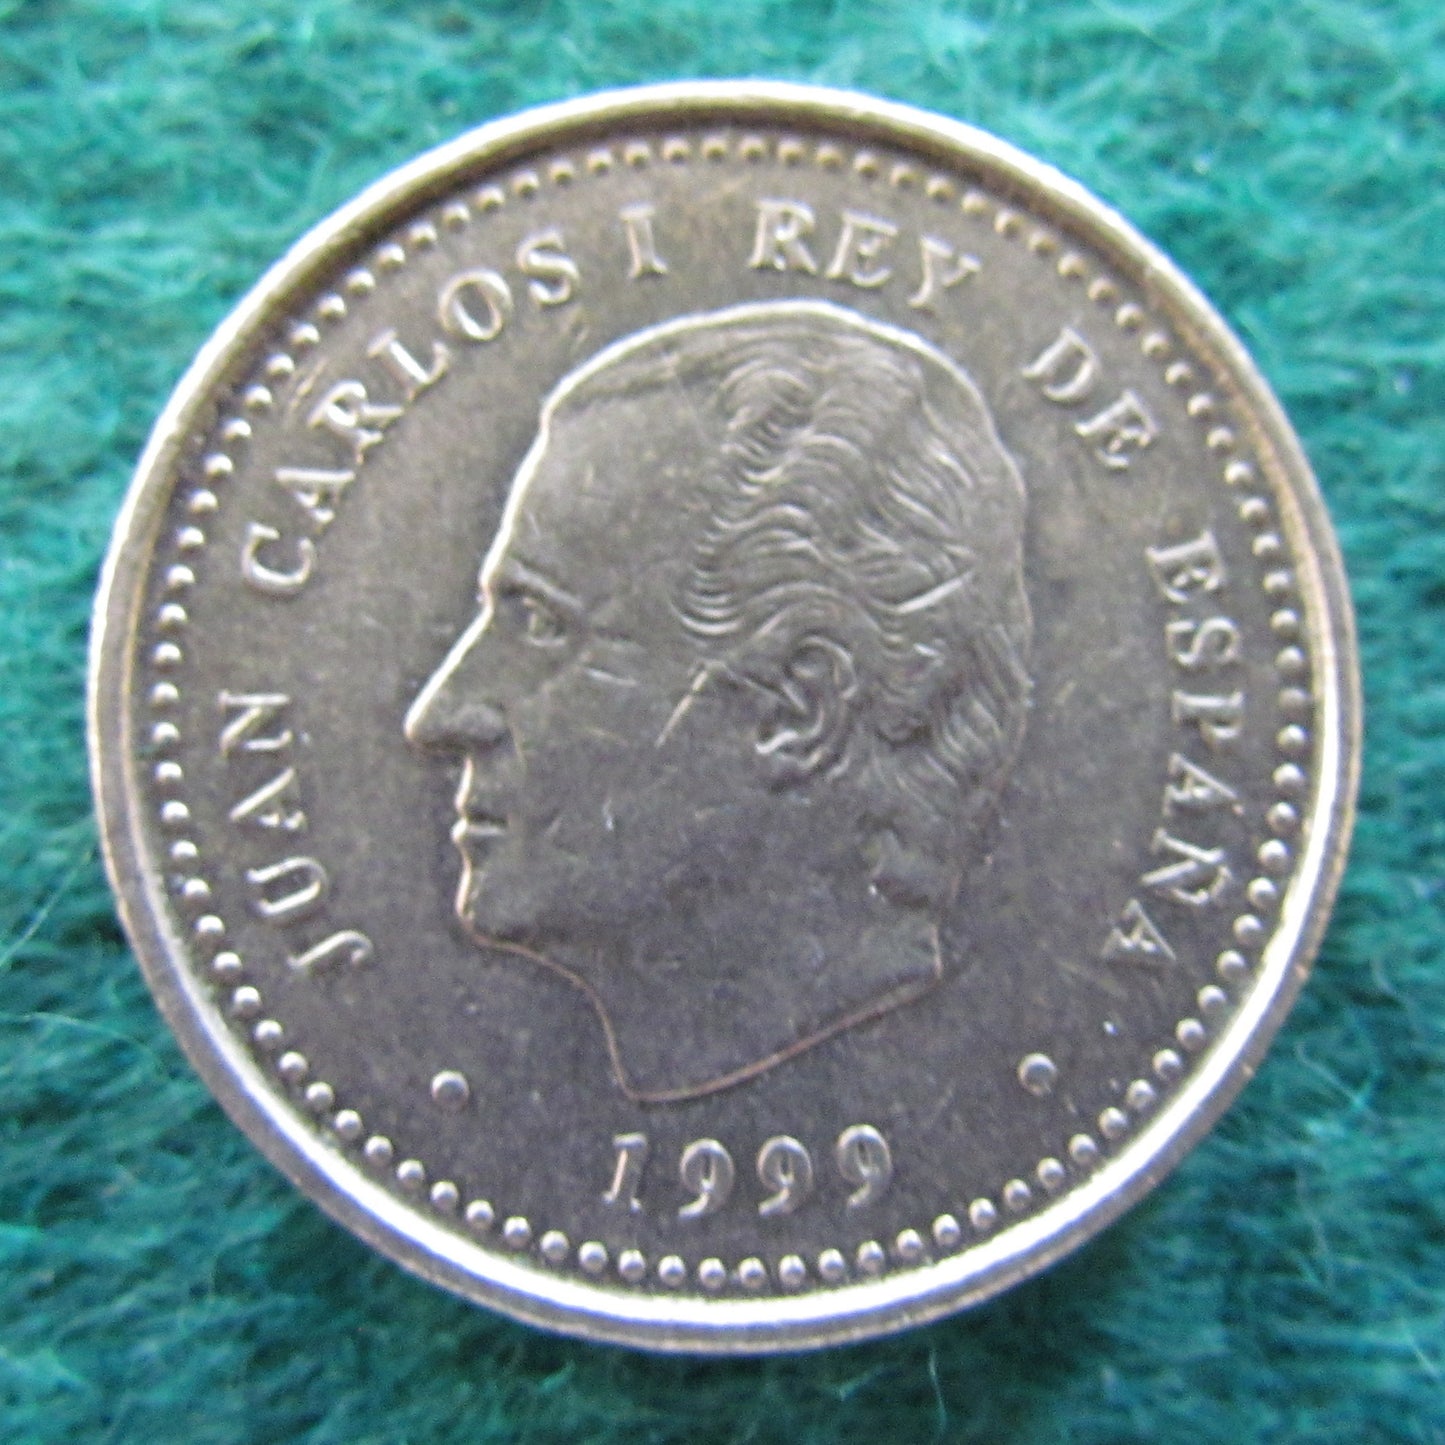 Spanish 1999 100 Pesetas Coin - Circulated